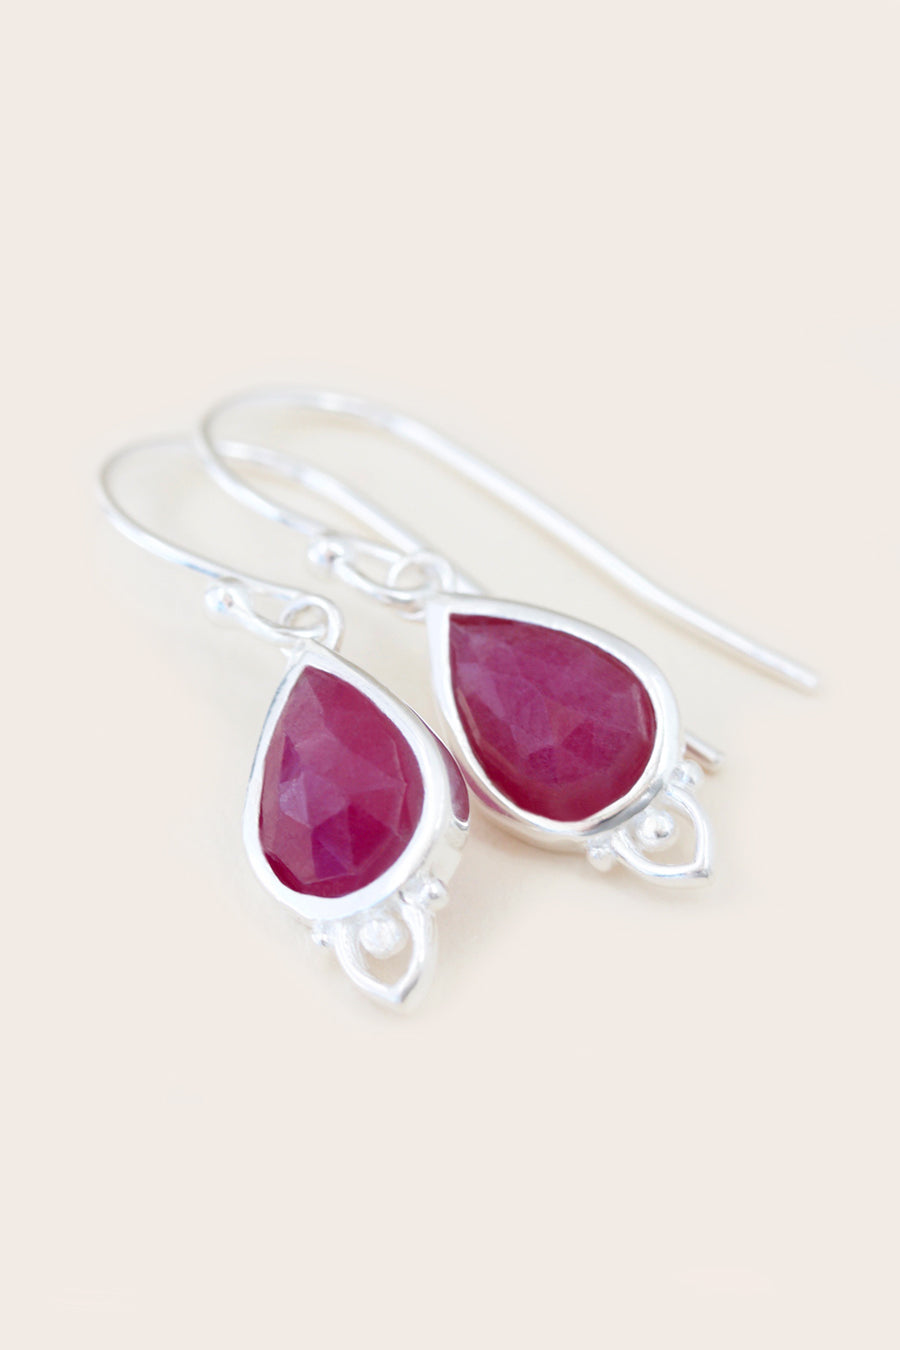 Root Chakra Red Ruby Gemstone earrings Silver NZ